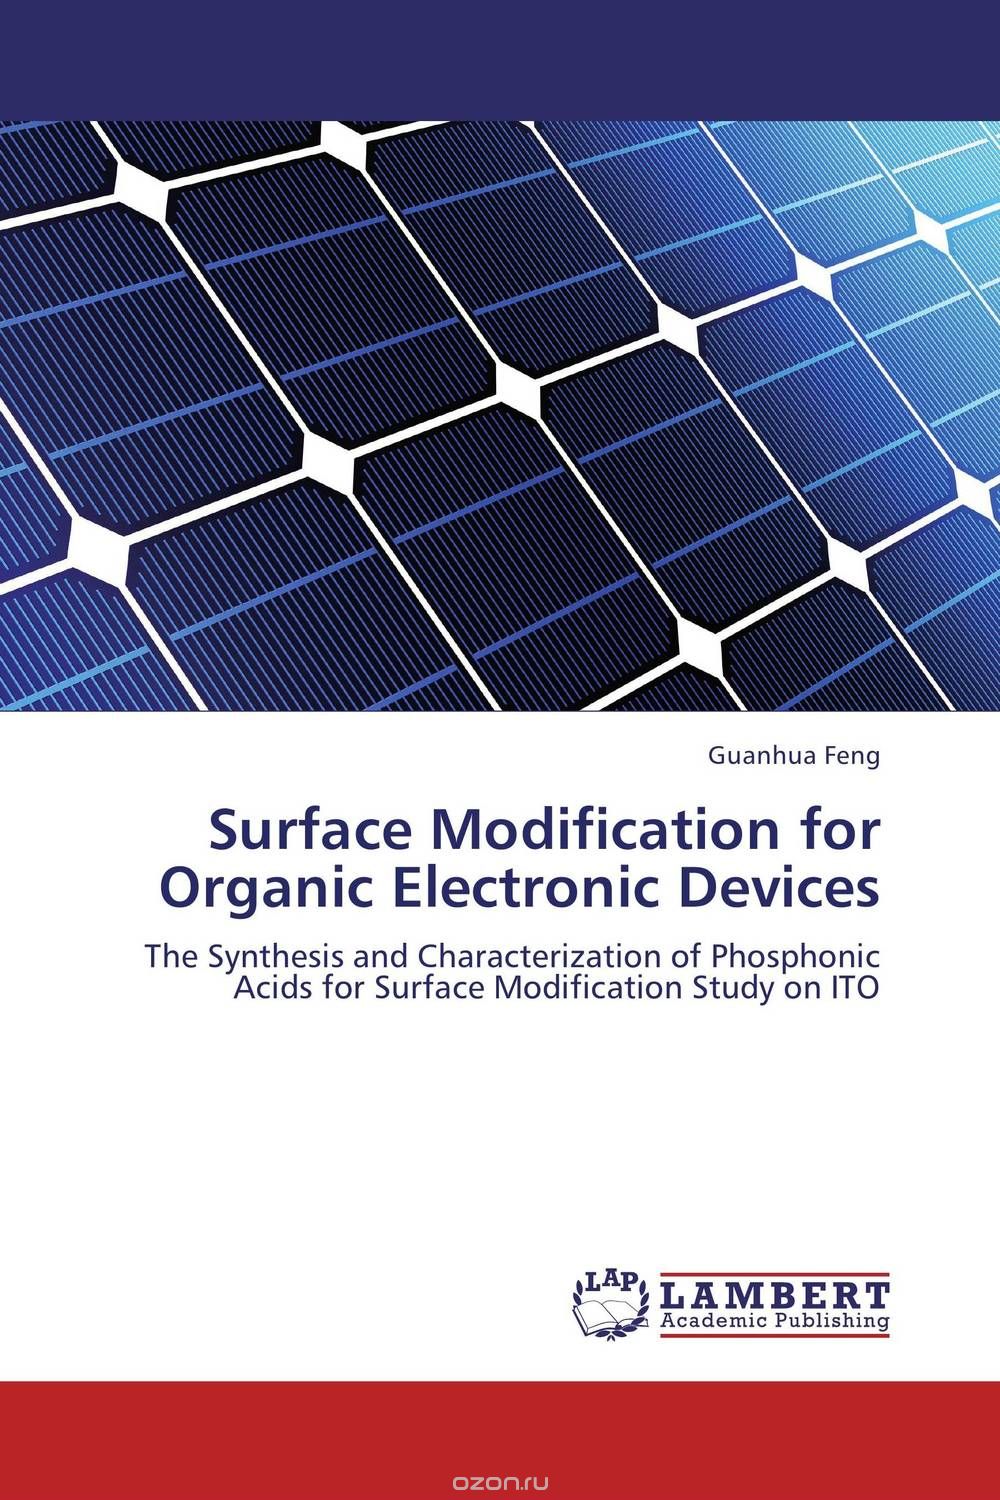 Скачать книгу "Surface Modification for Organic Electronic Devices"